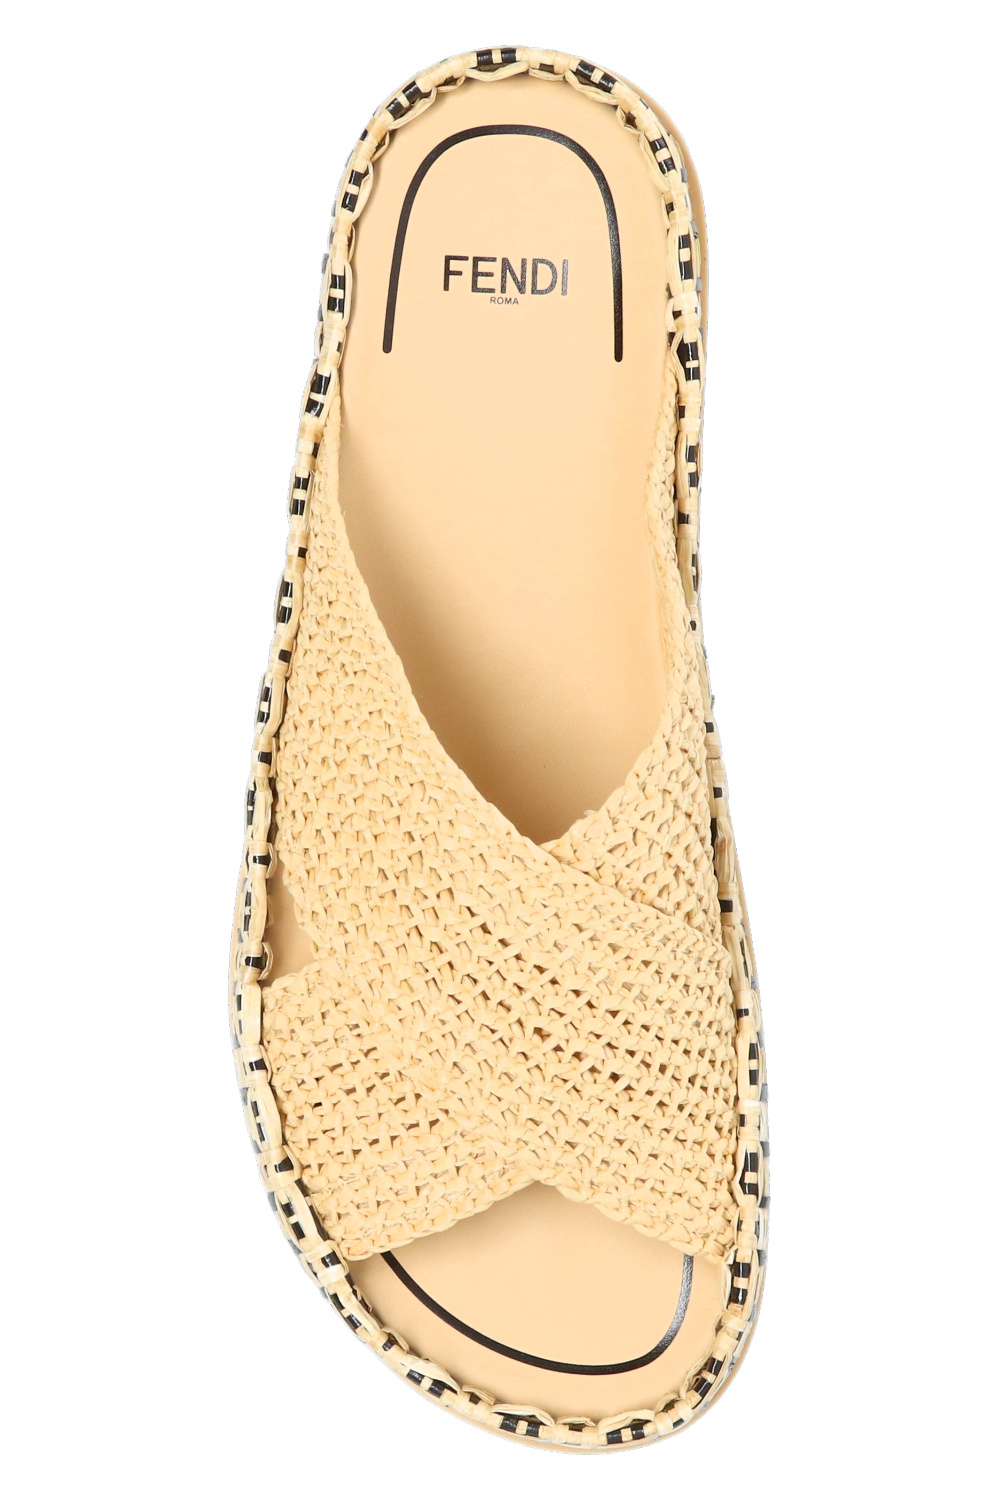 Fendi Fendi First Small Python Bag 26cm Brown Ganebet Store